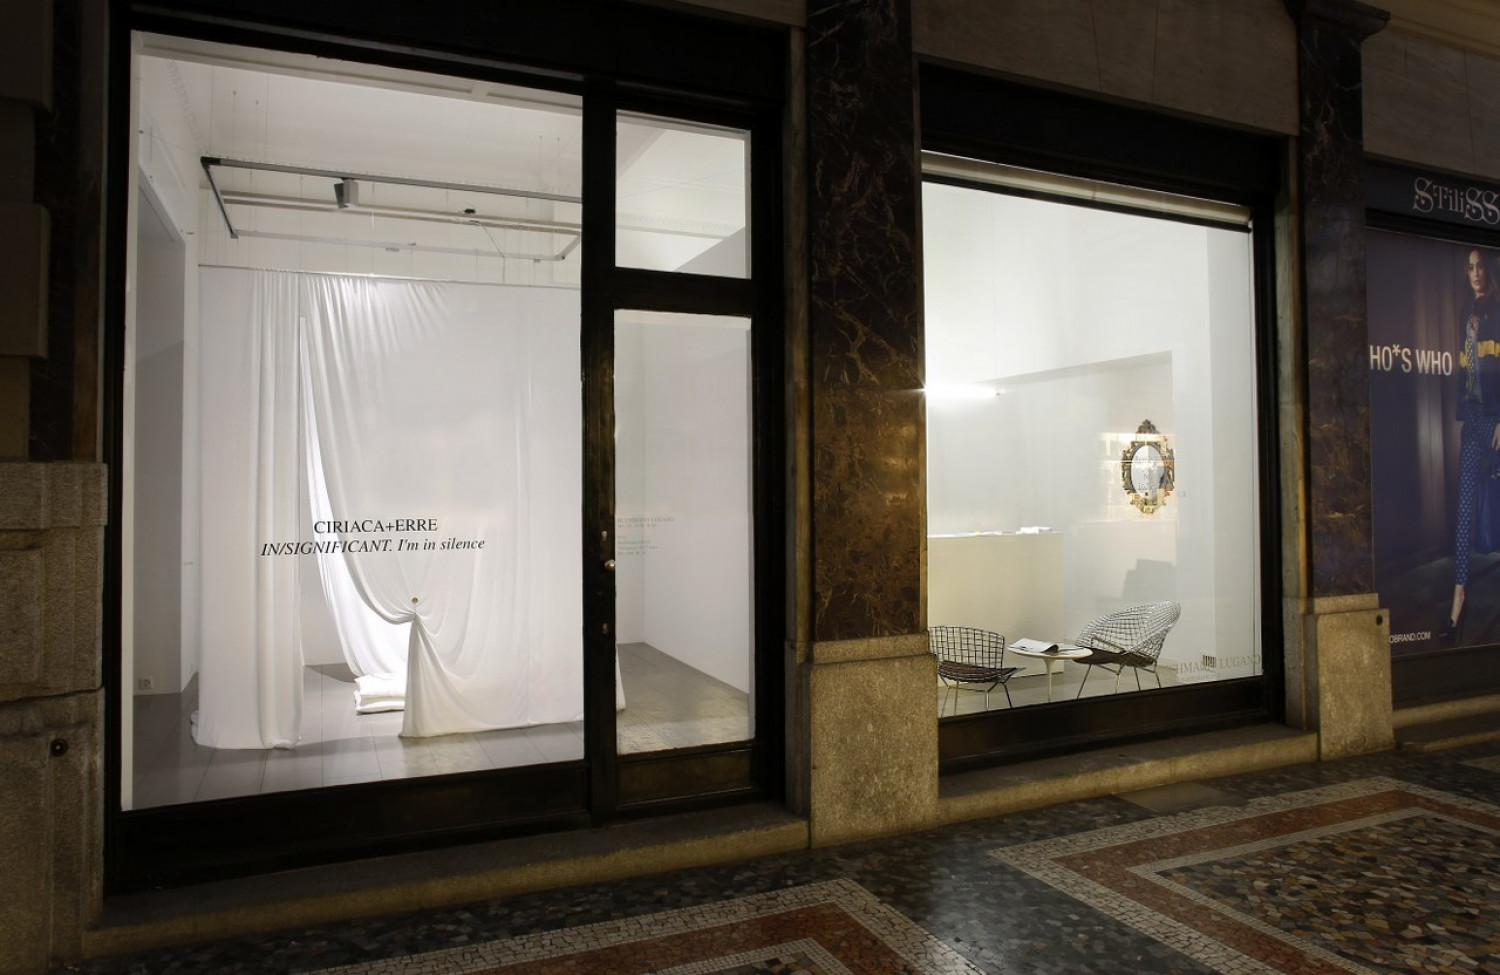 Ciriaca+Erre, ‘IN/SIGNIFICANT - I'm in silence’, Installation view, Buchmann Lugano